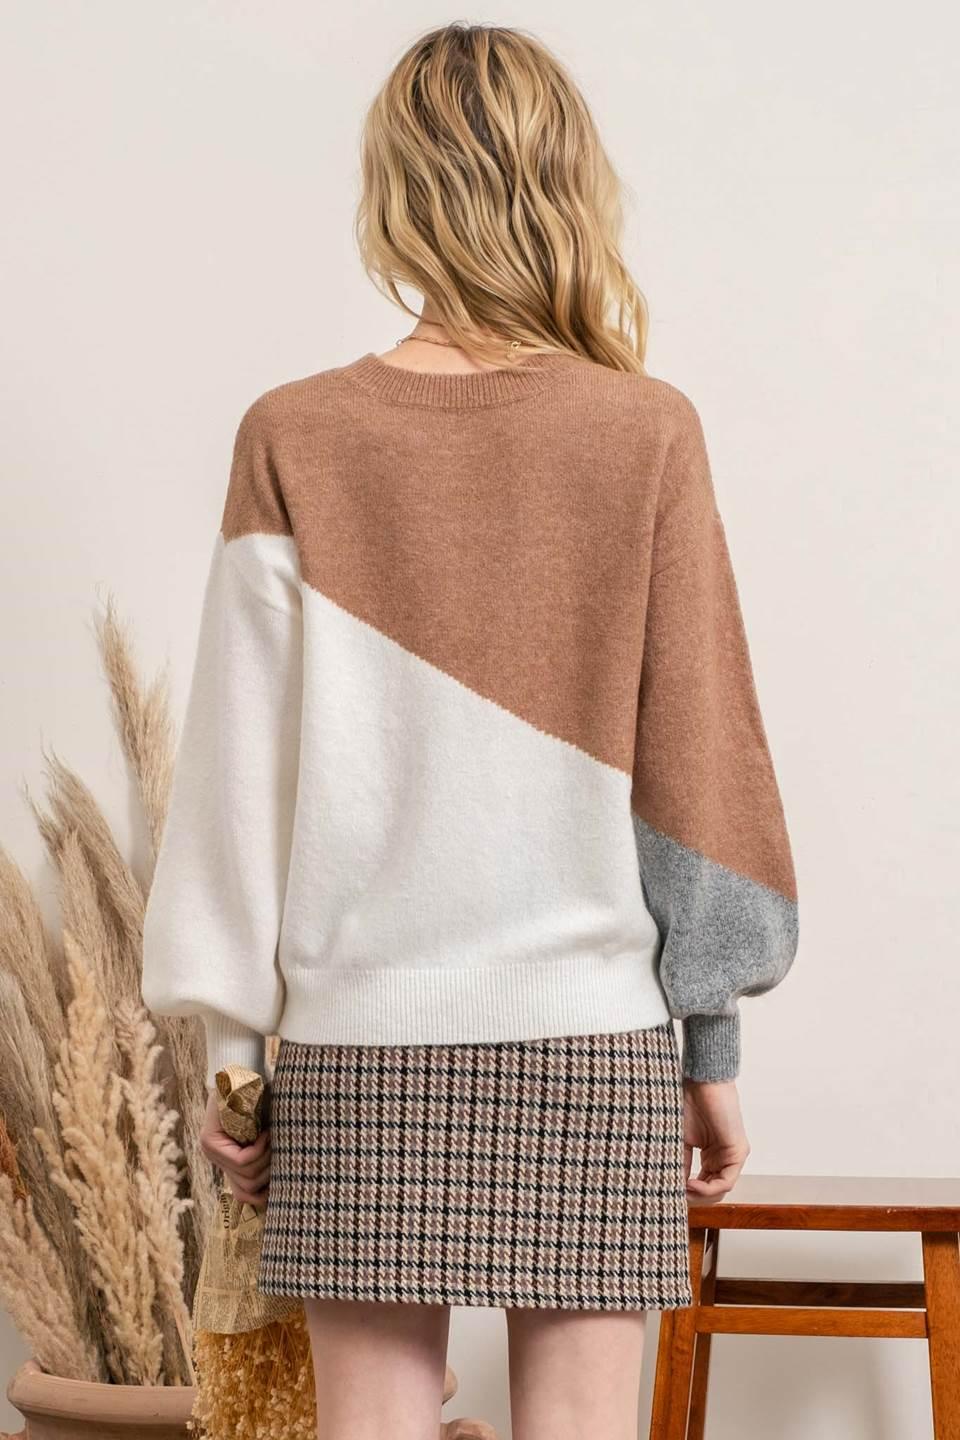 Khacki/Grey Color Block Sweater - Strawberry Moon Boutique